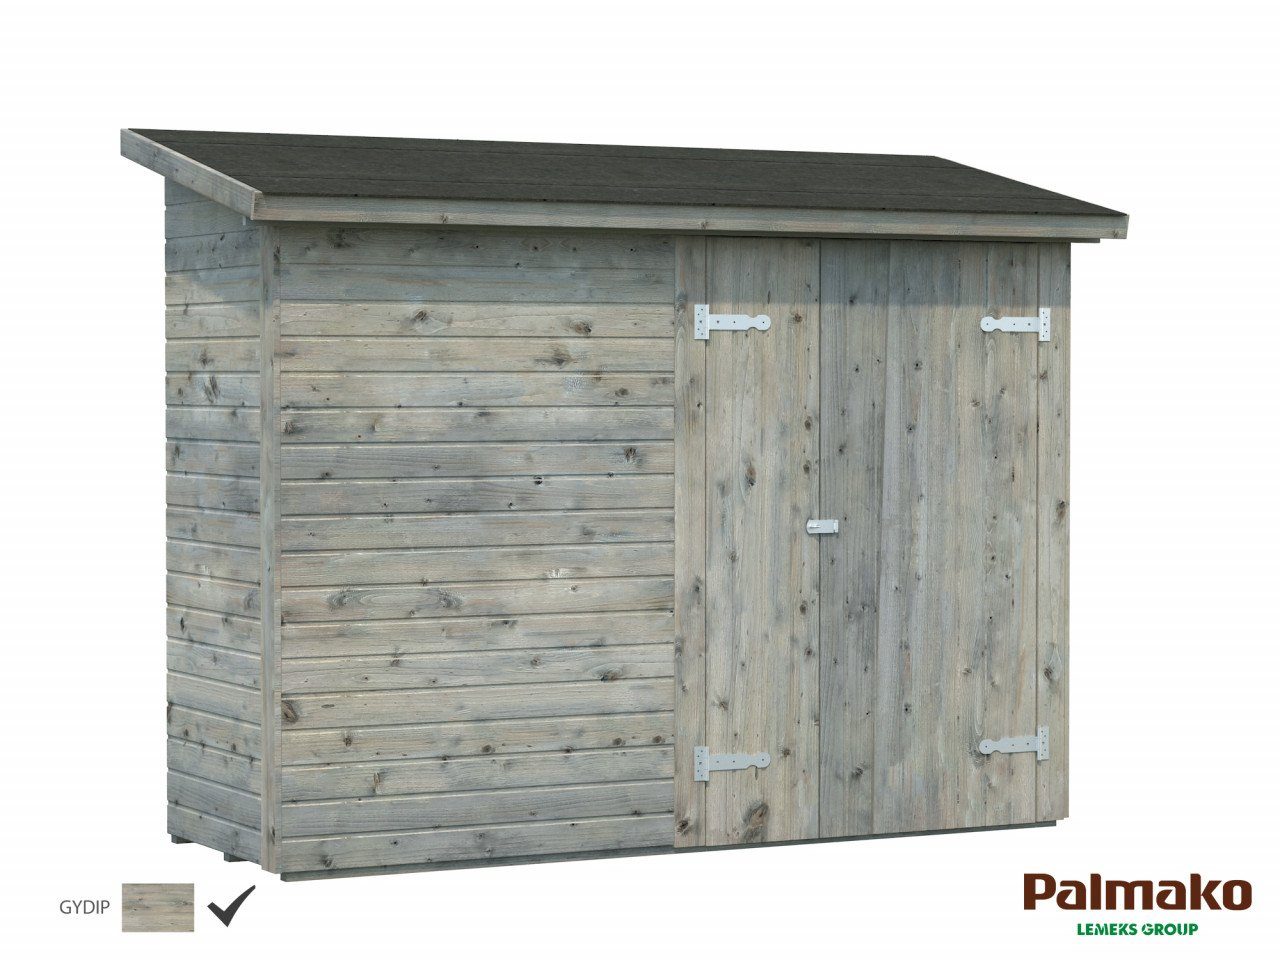 Palmako Gerätehaus Leif 2,2 cm farblos BxT: 234x95 Holz Gartenhaus